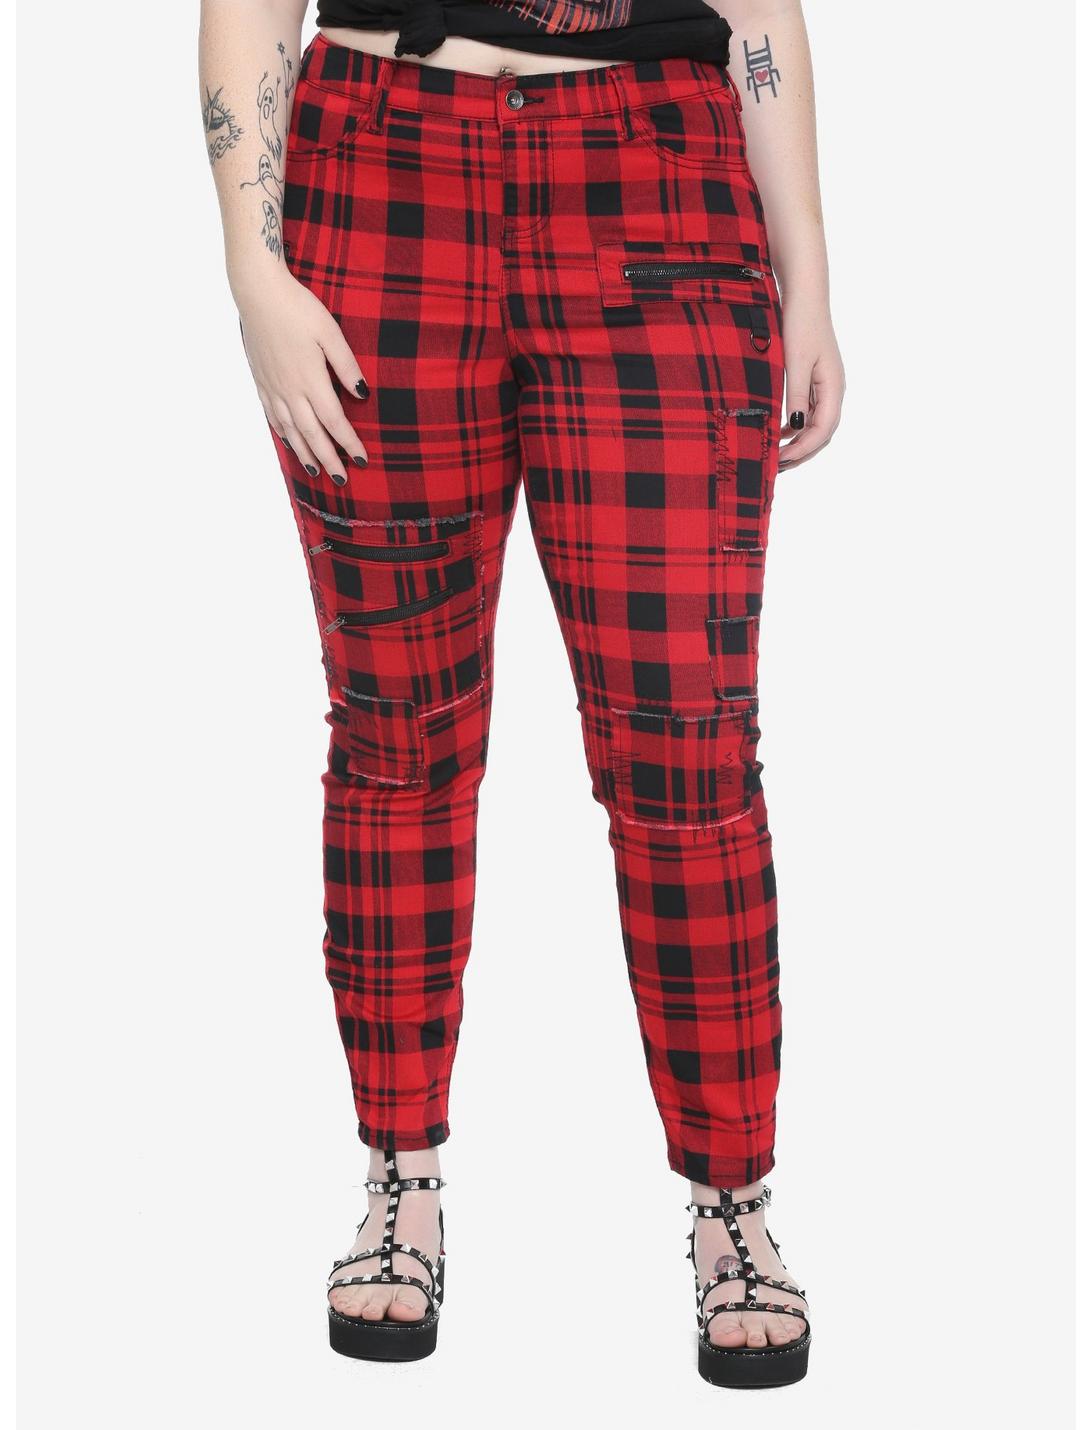 Blackheart Red & Black Plaid Super Skinny Pants Plus Size, RED, hi-res